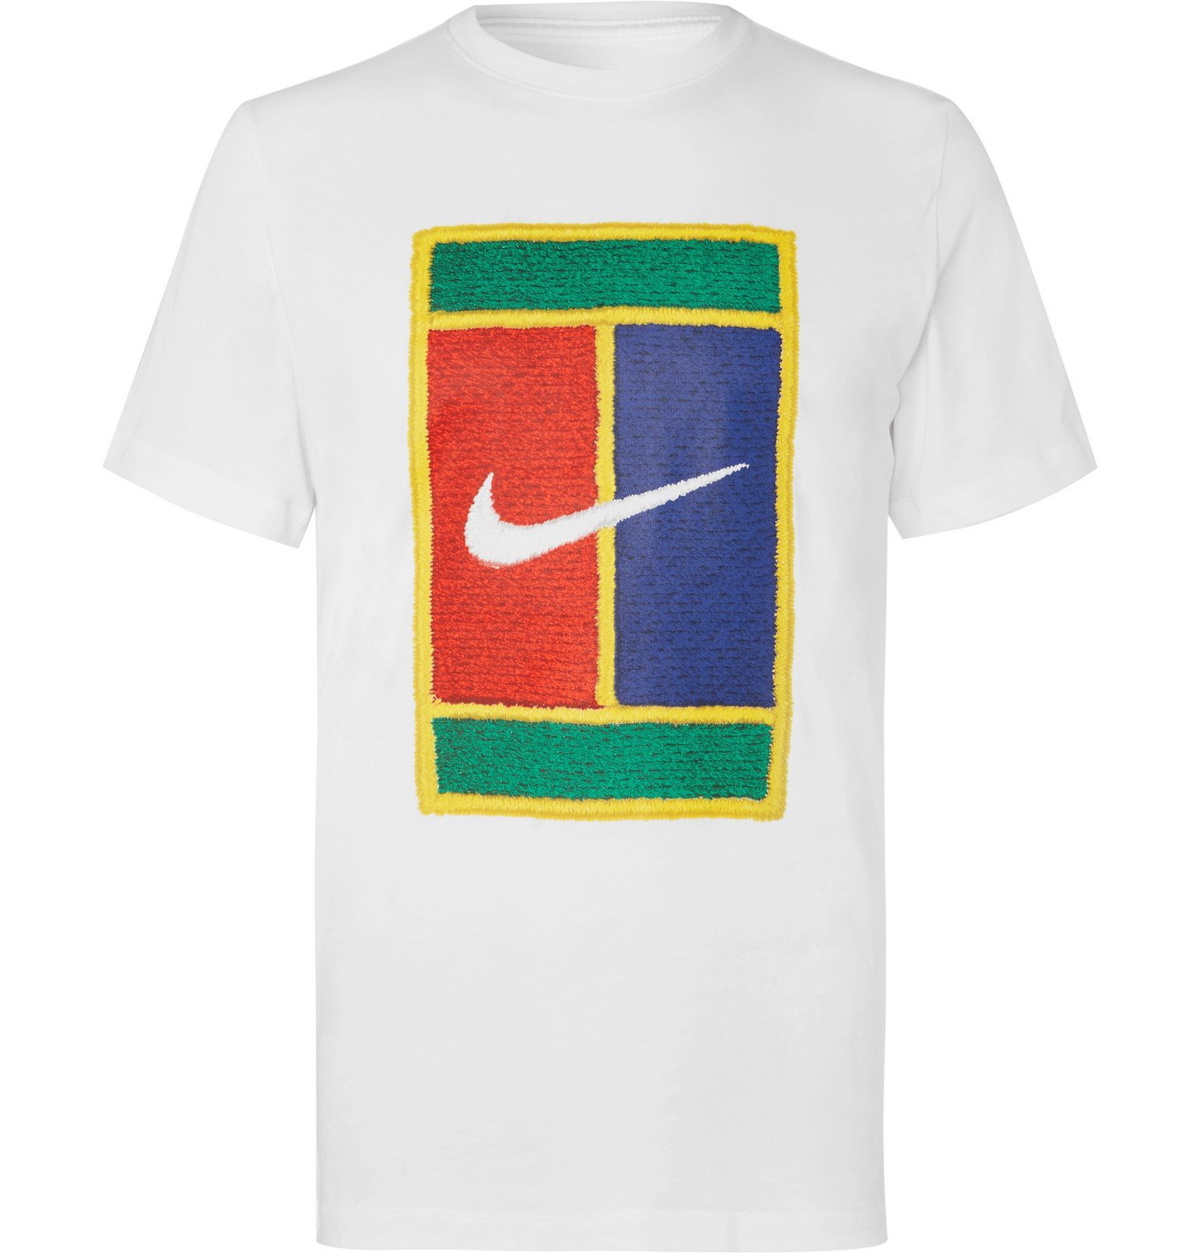 Nike Tennis - NikeCourt Logo-Print Cotton-Jersey T-Shirt - White Tennis